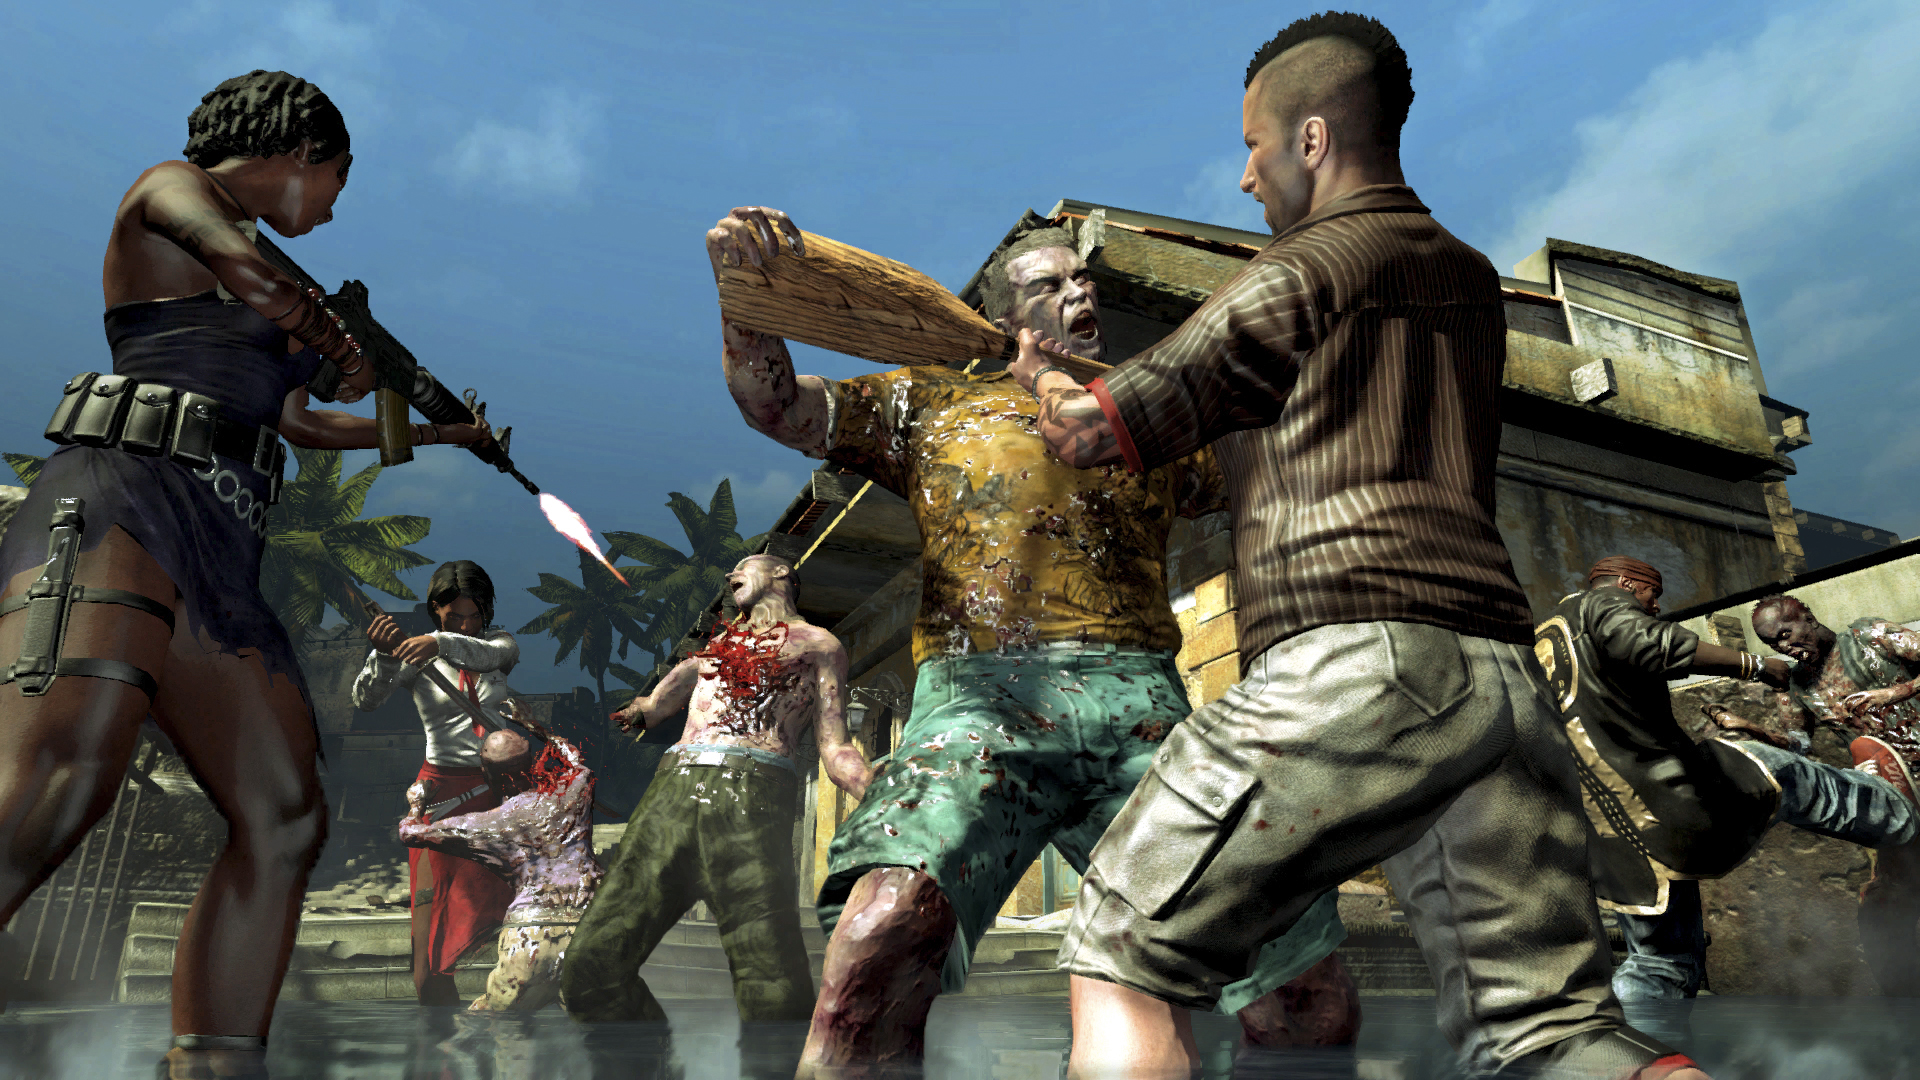 Dead Island 2 - NEW Gameplay Footage! 